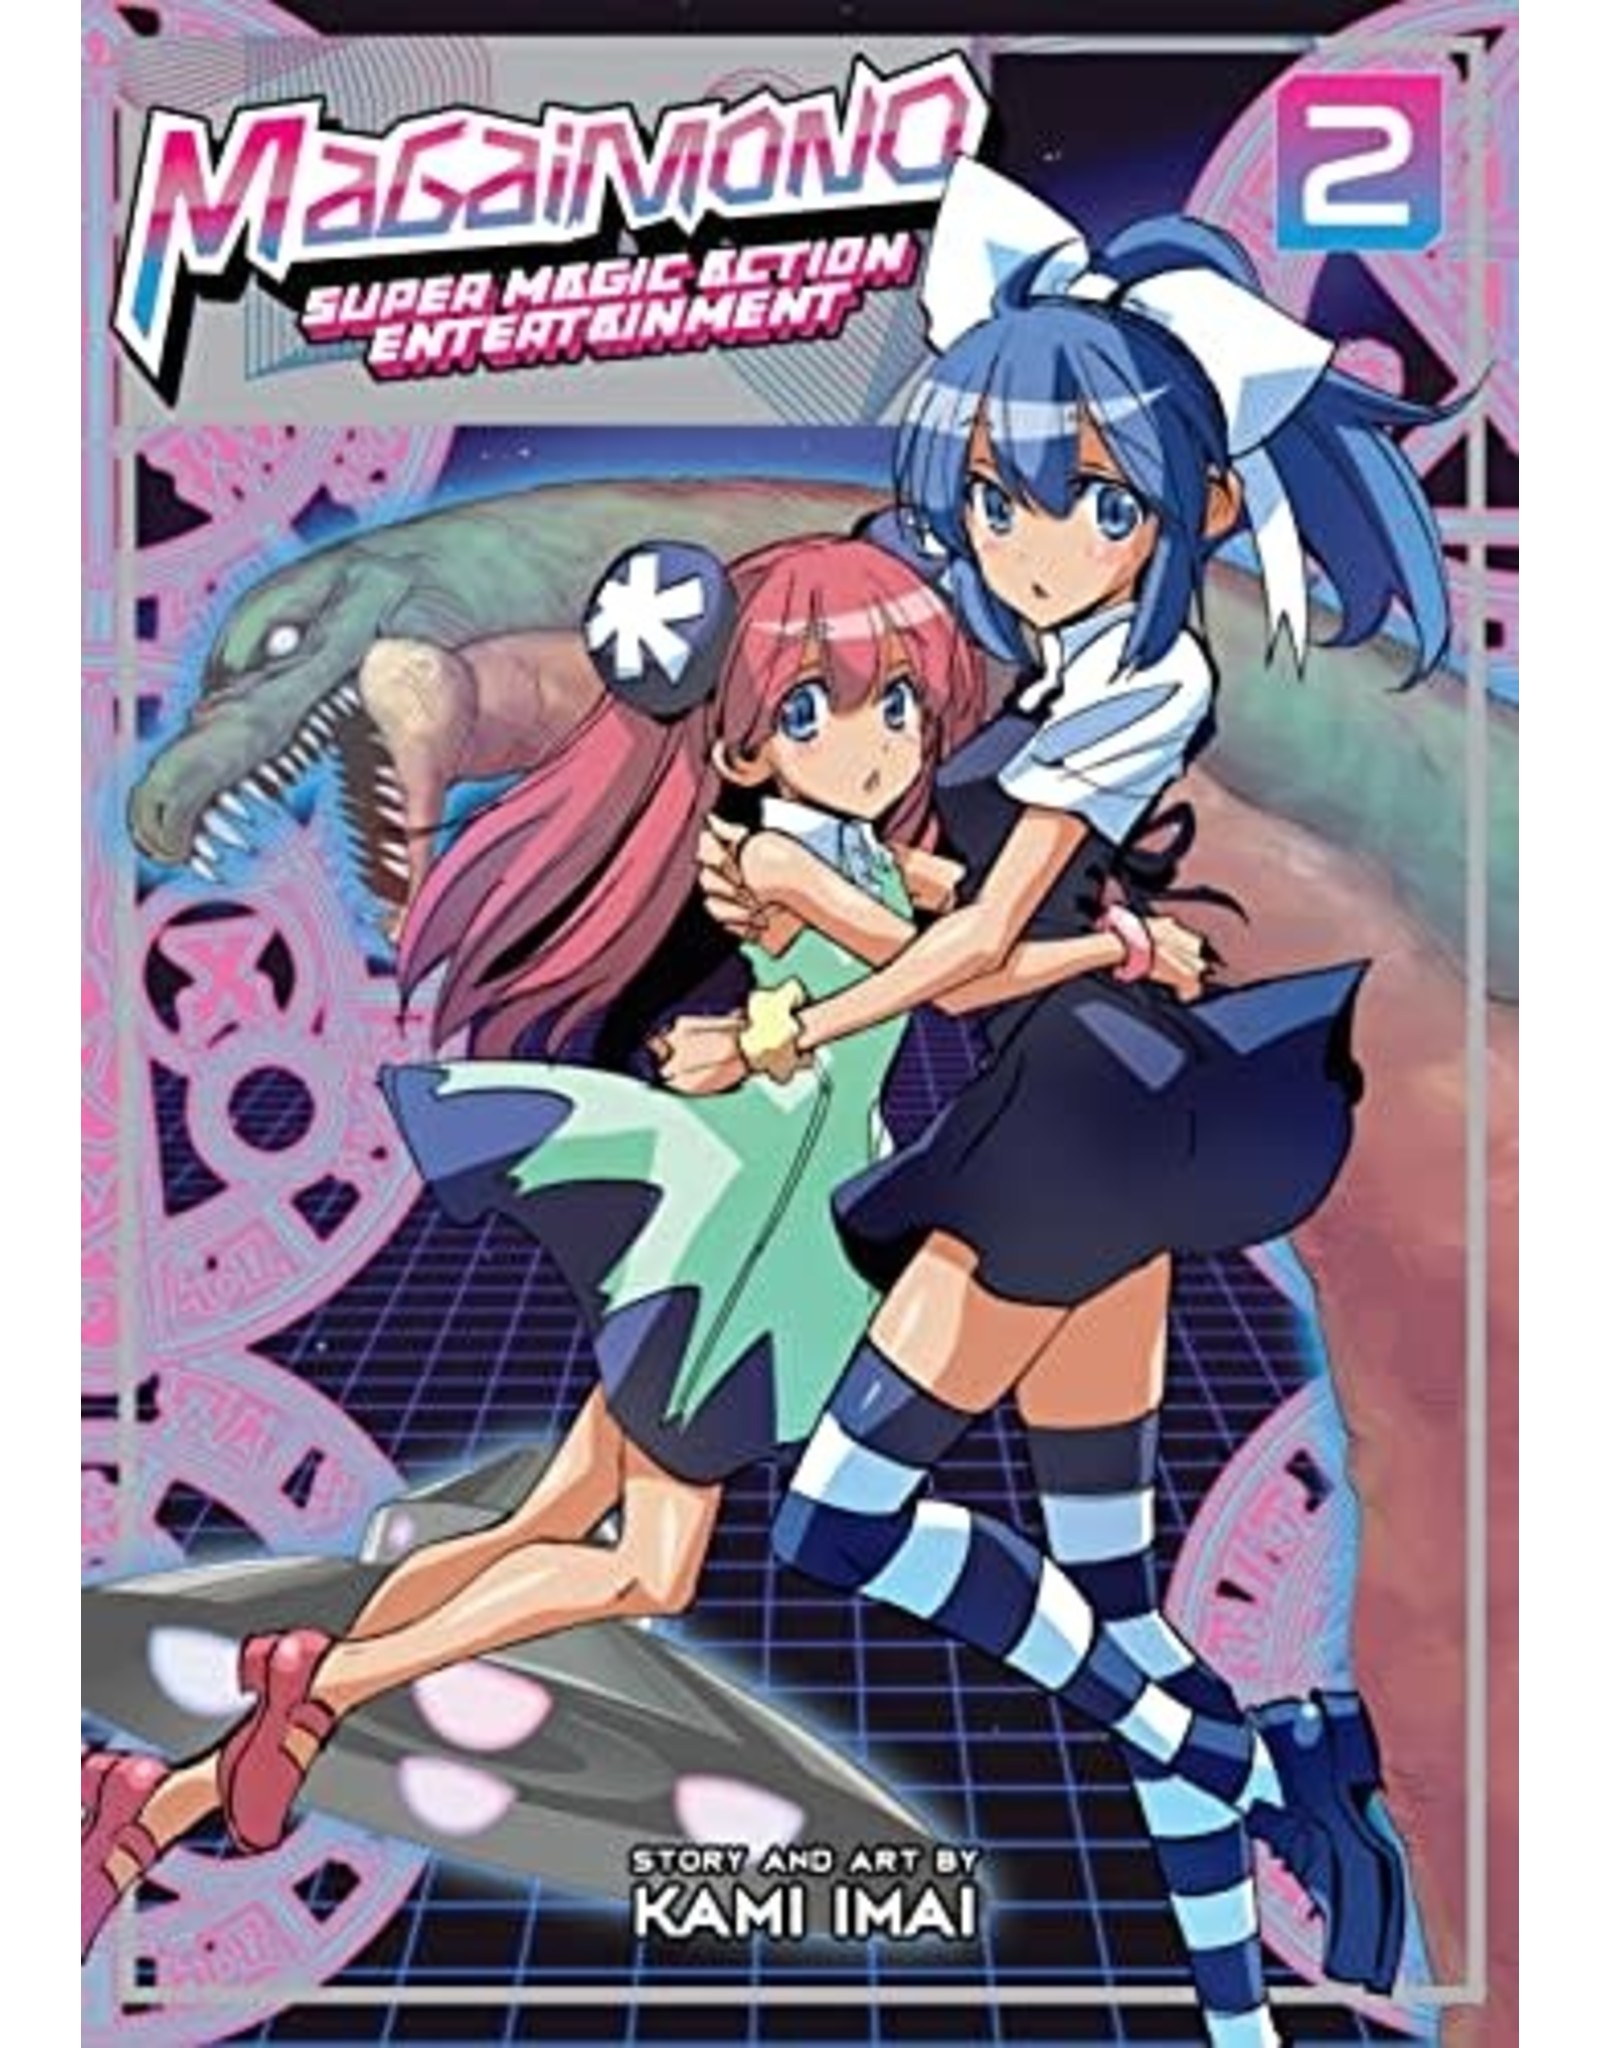 Magaimono: Super Magic Action Entertainment 02 (English) - Manga